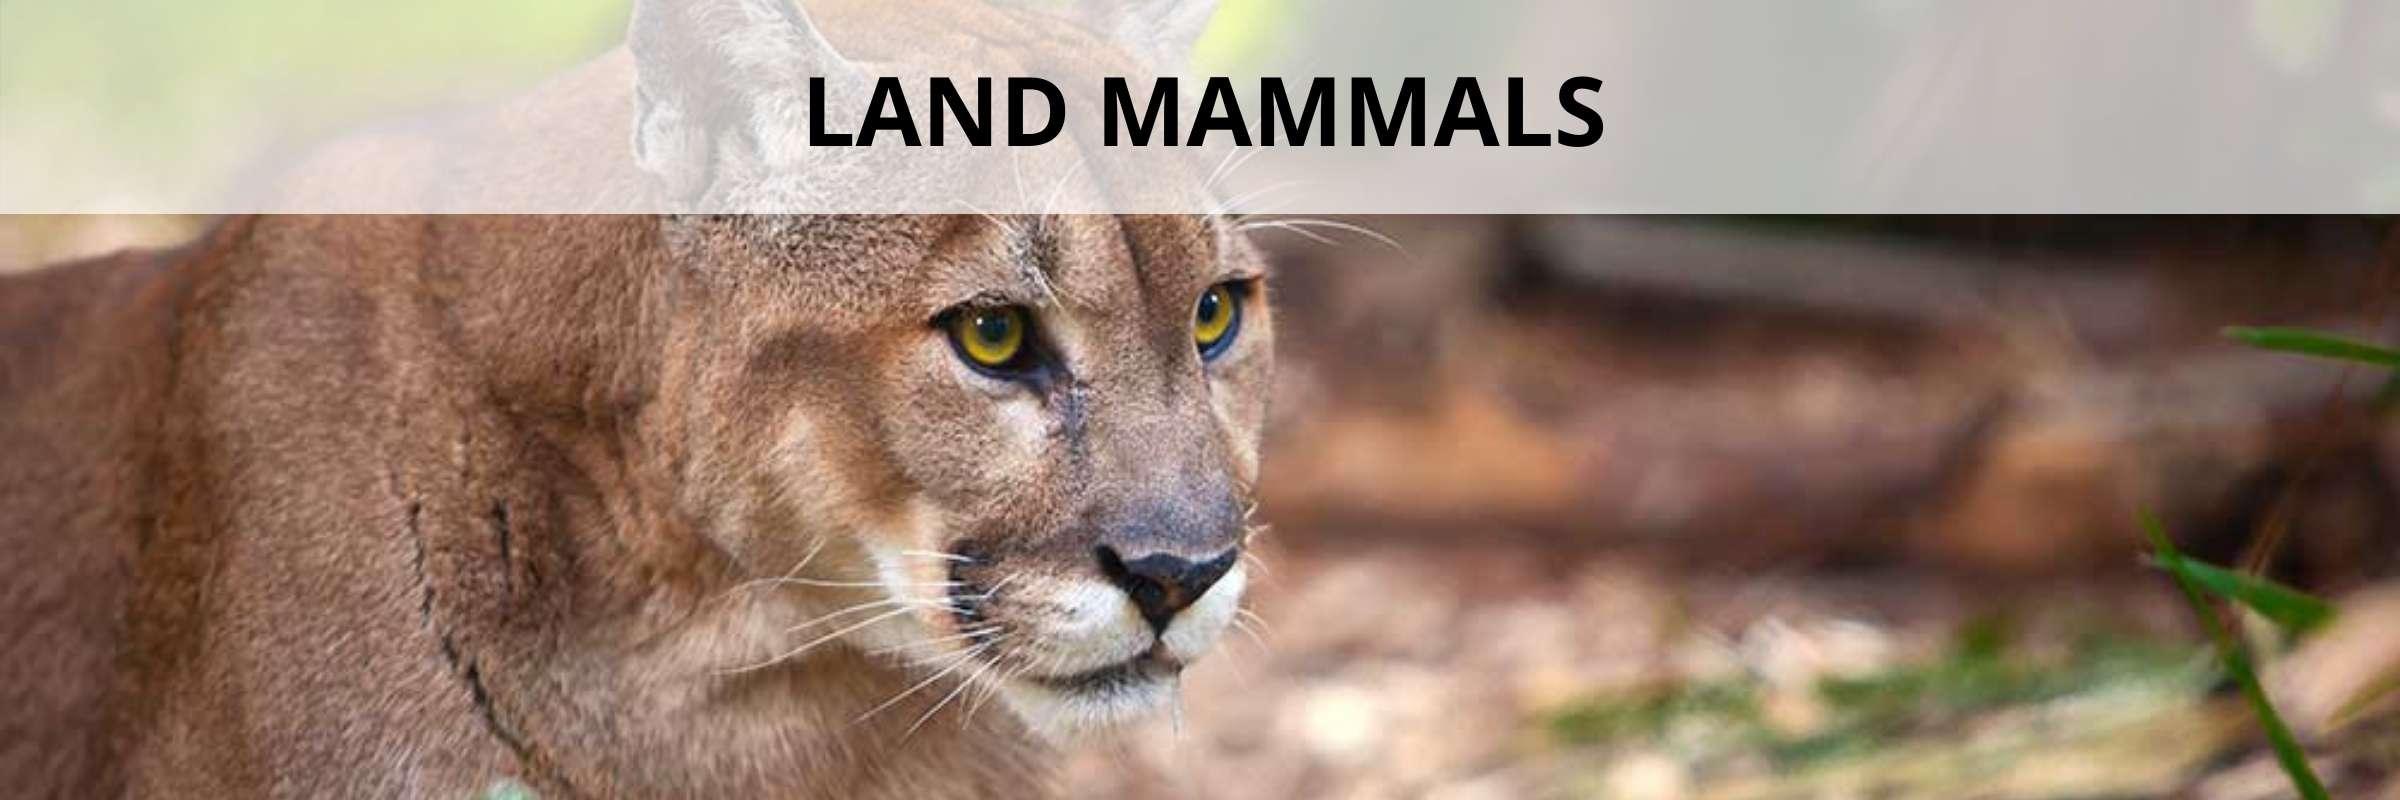 Florida Land Mammals - Florida Smart